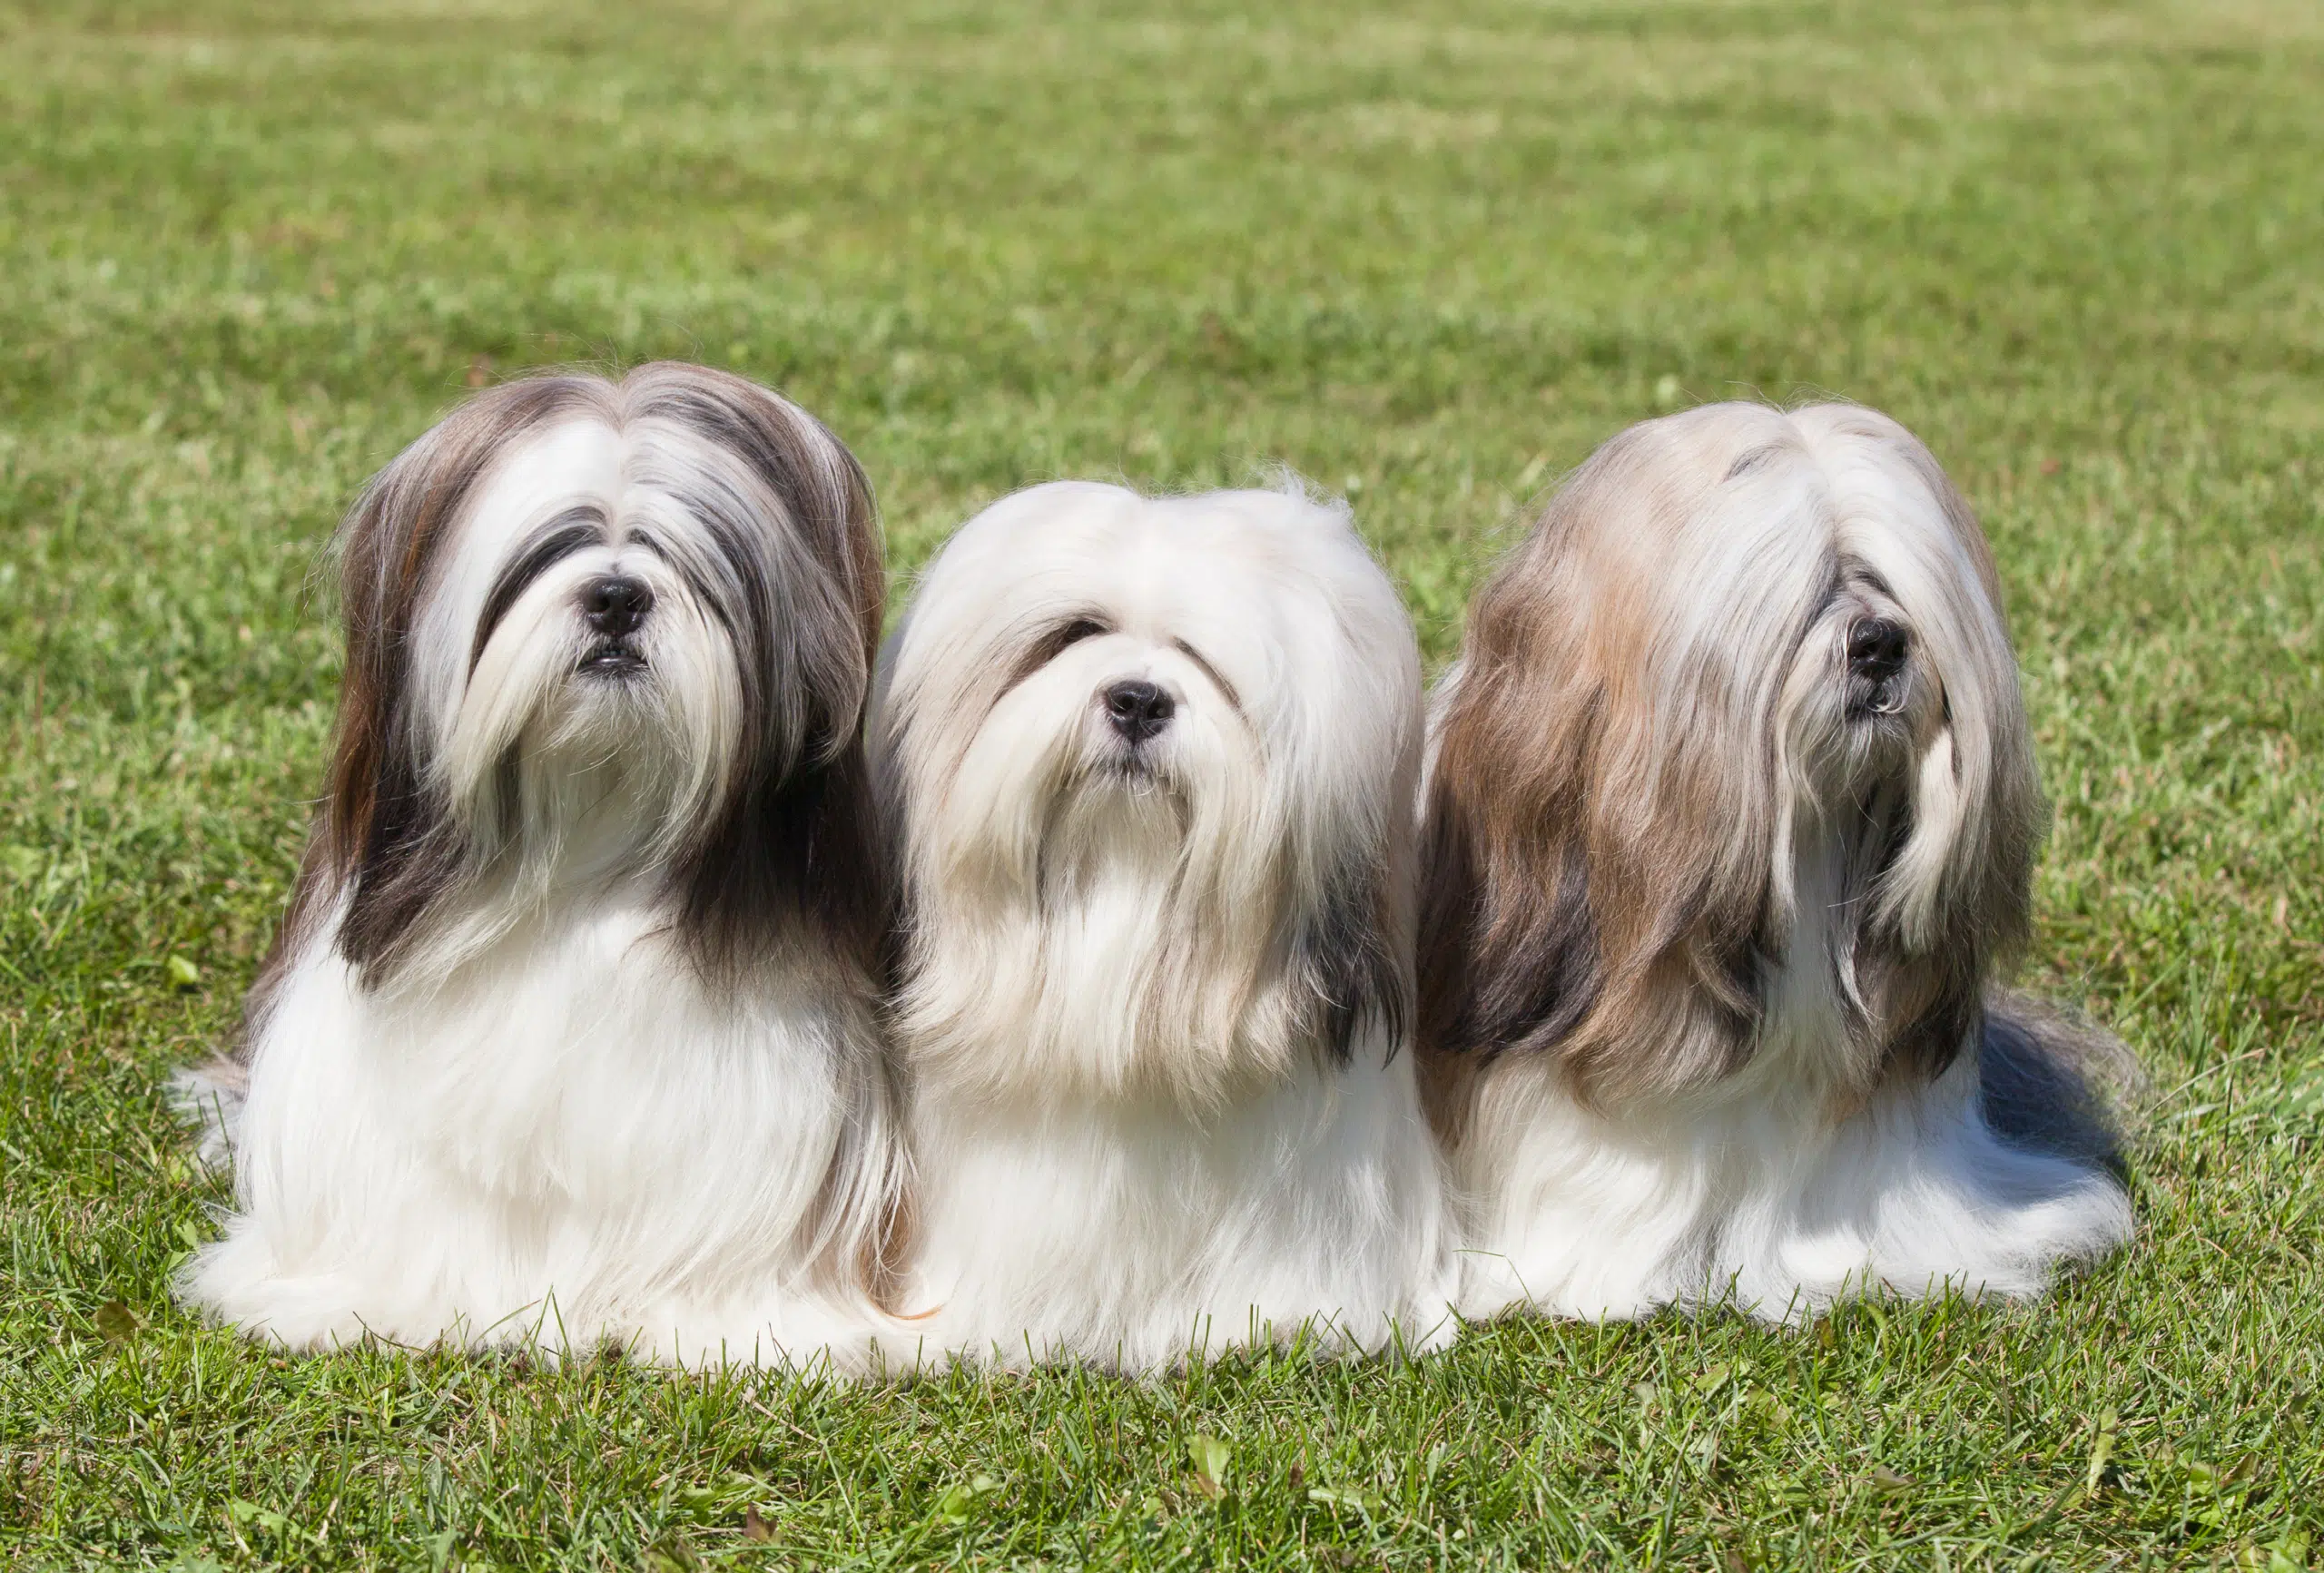 Three Lhasa Apso dogs